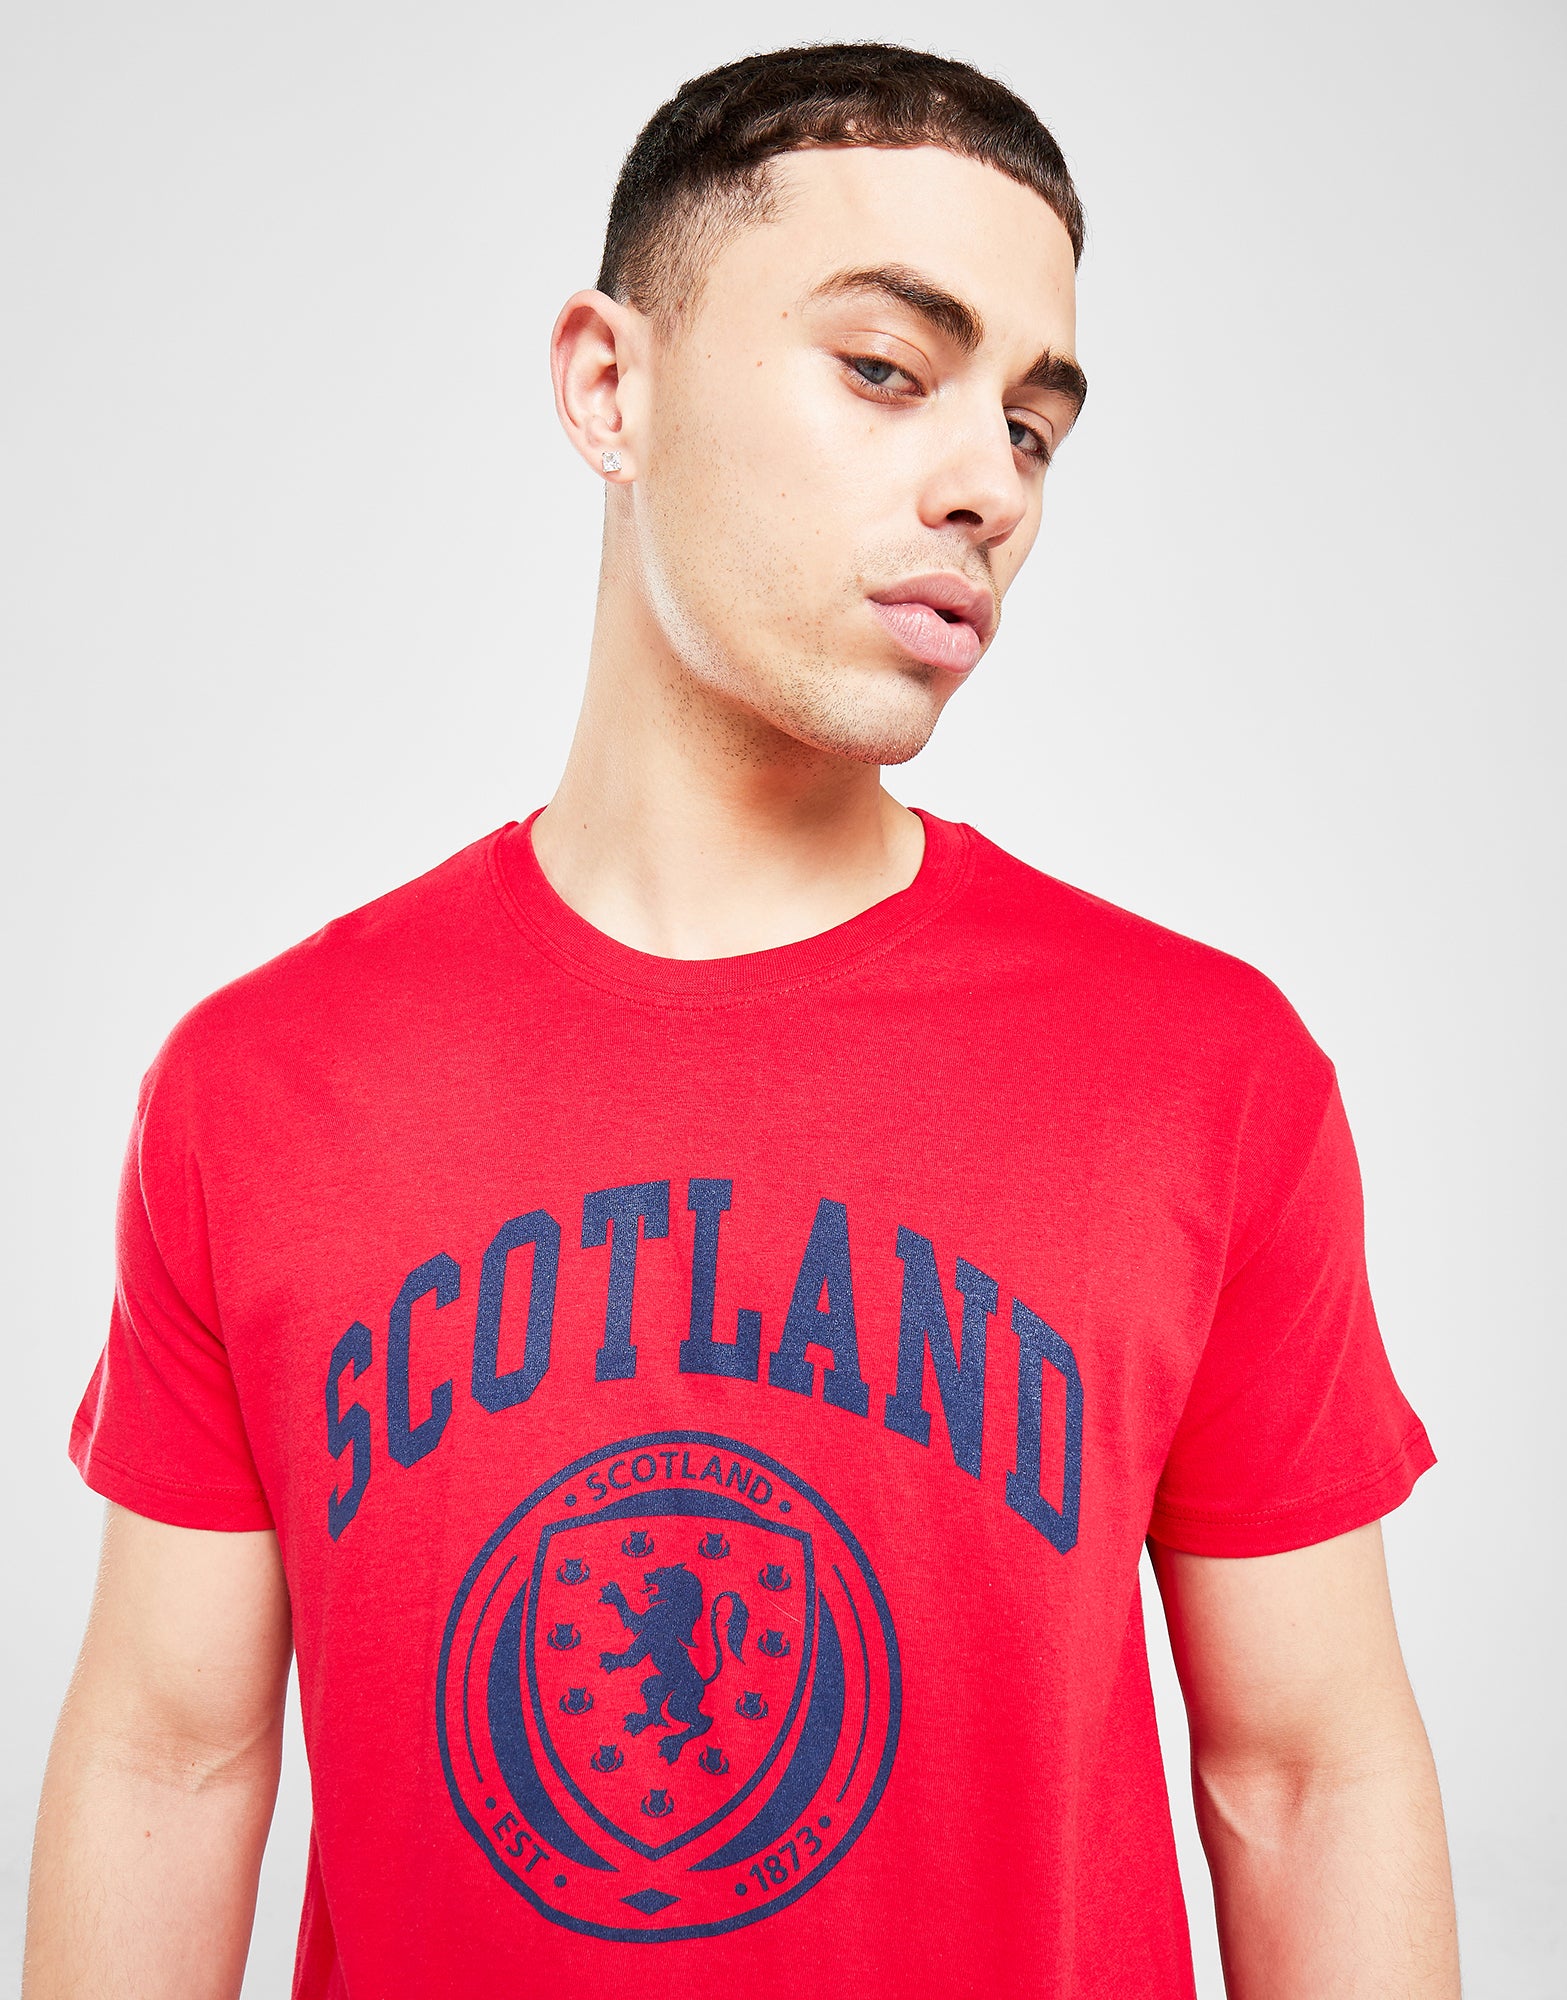 Official Team Scotland logo T-Shirt - Red - The World Football Store